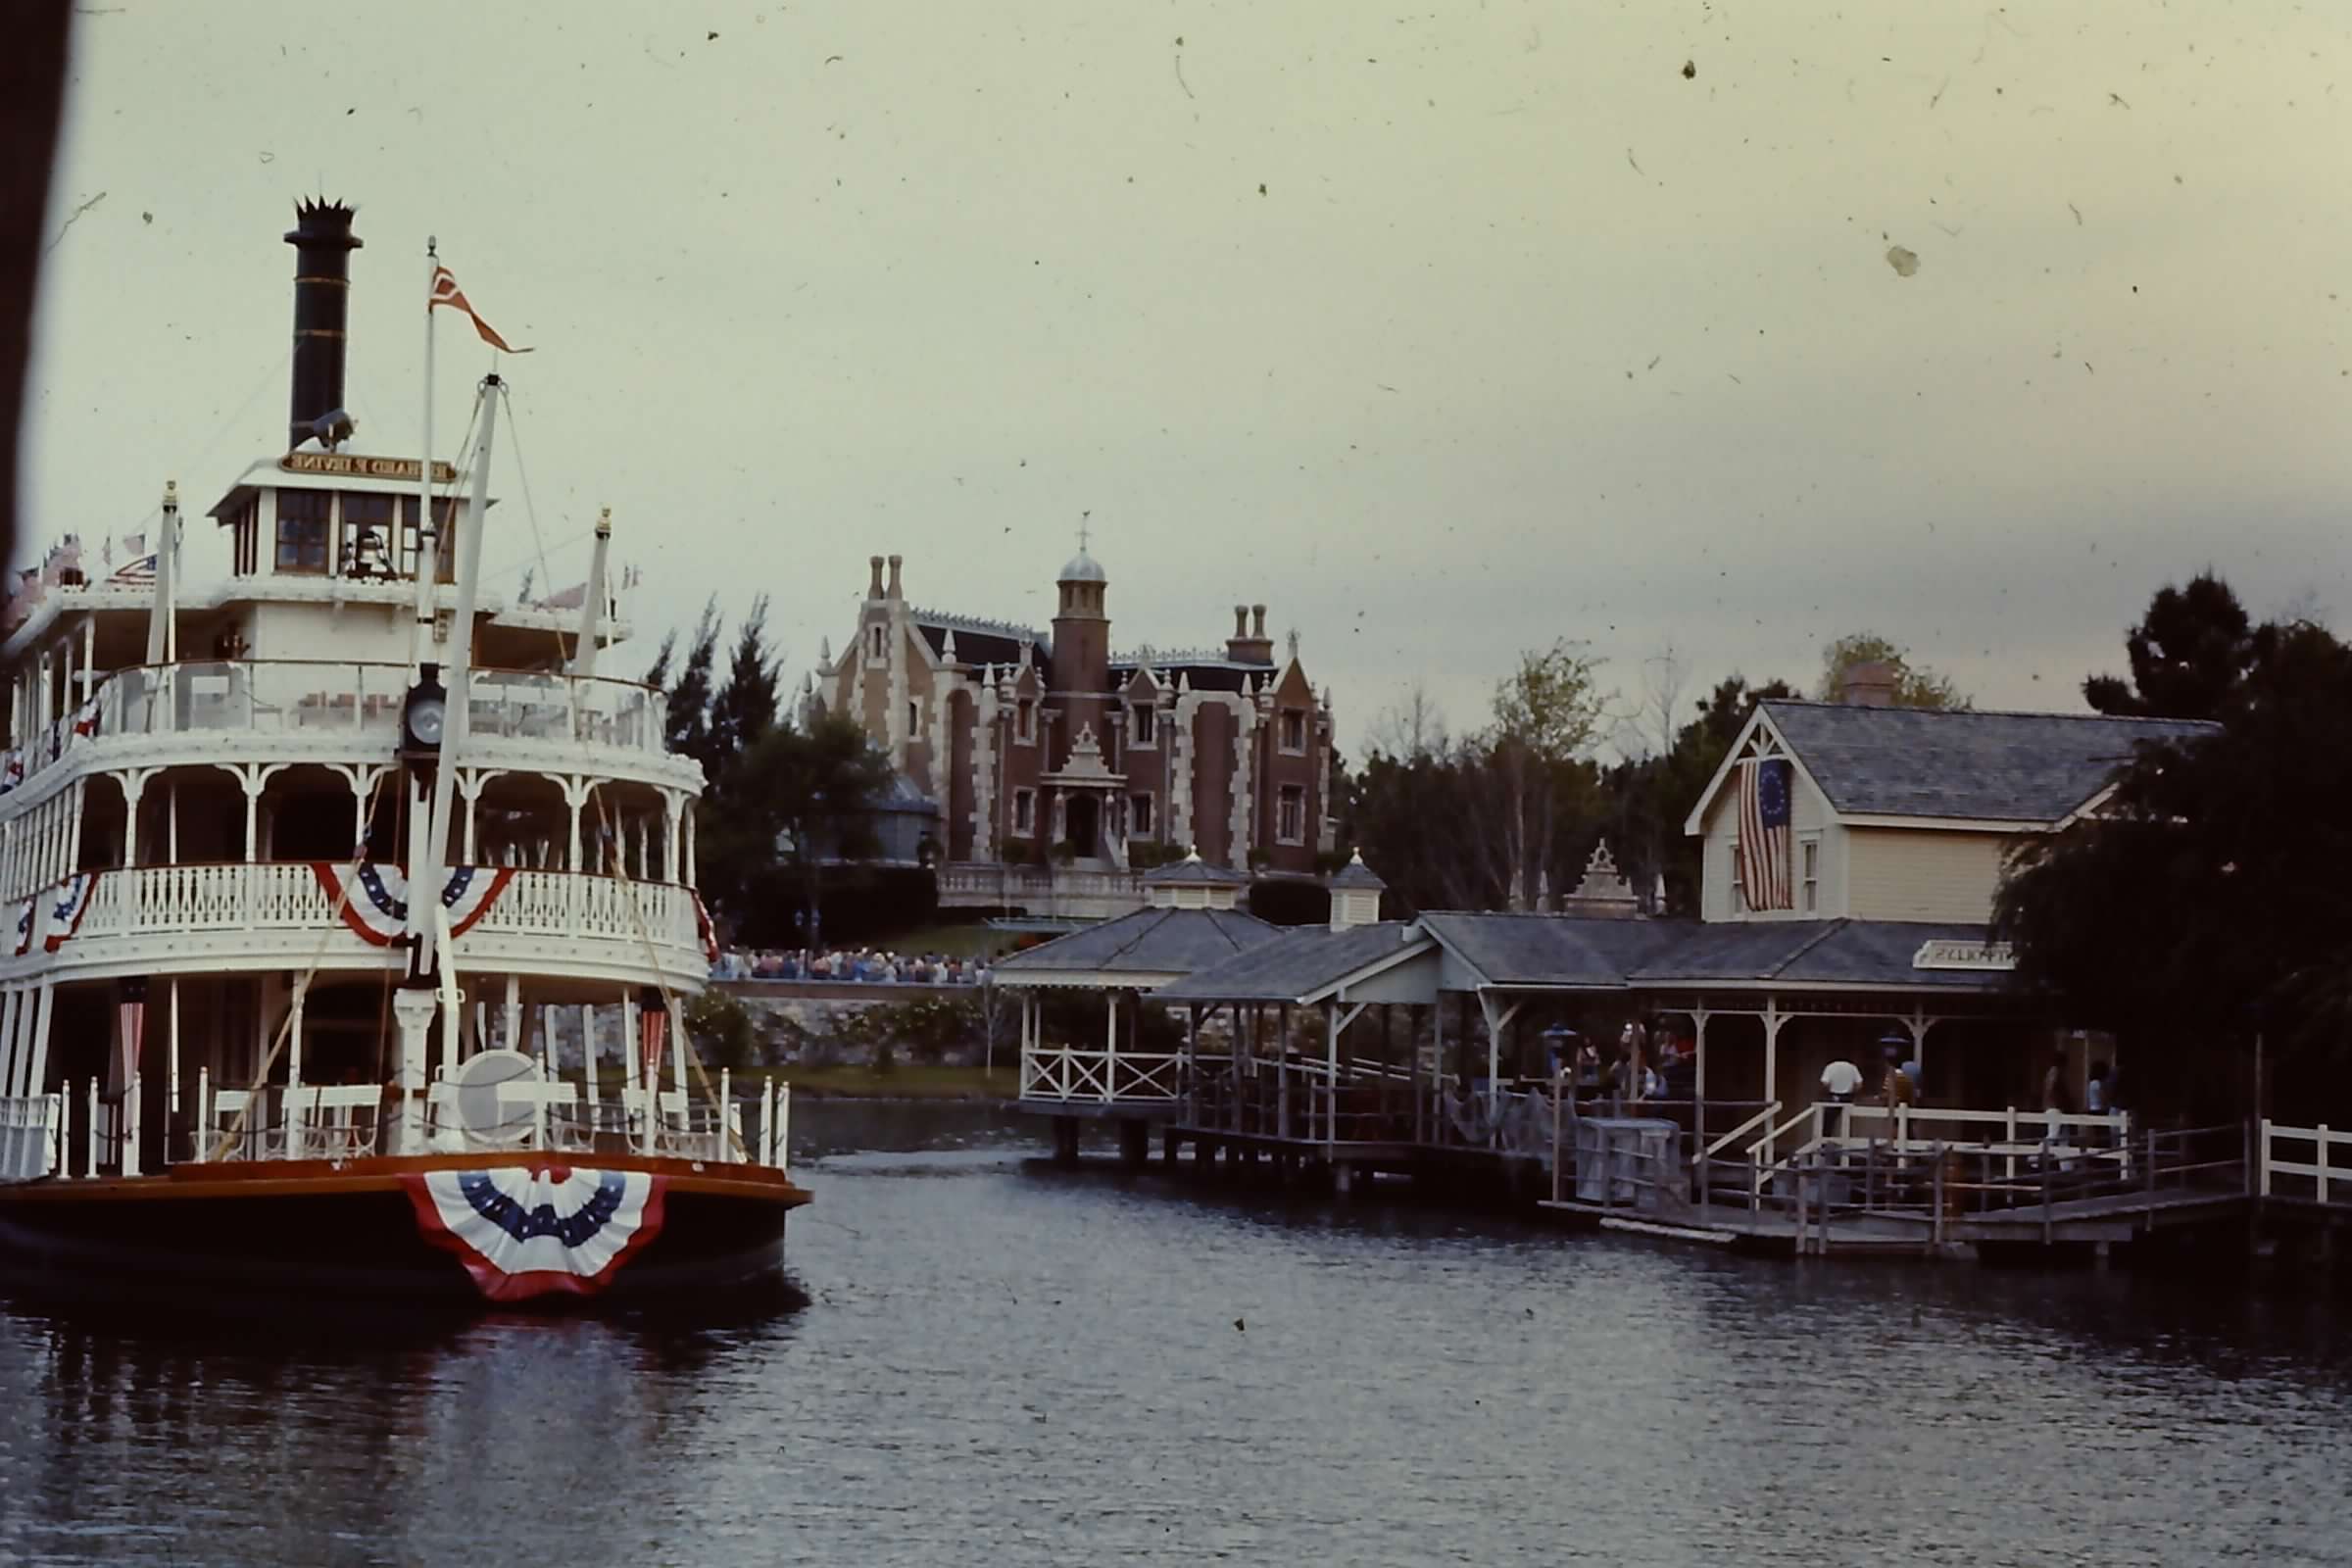 The Haunted Mansion in Walt Disney World Florida